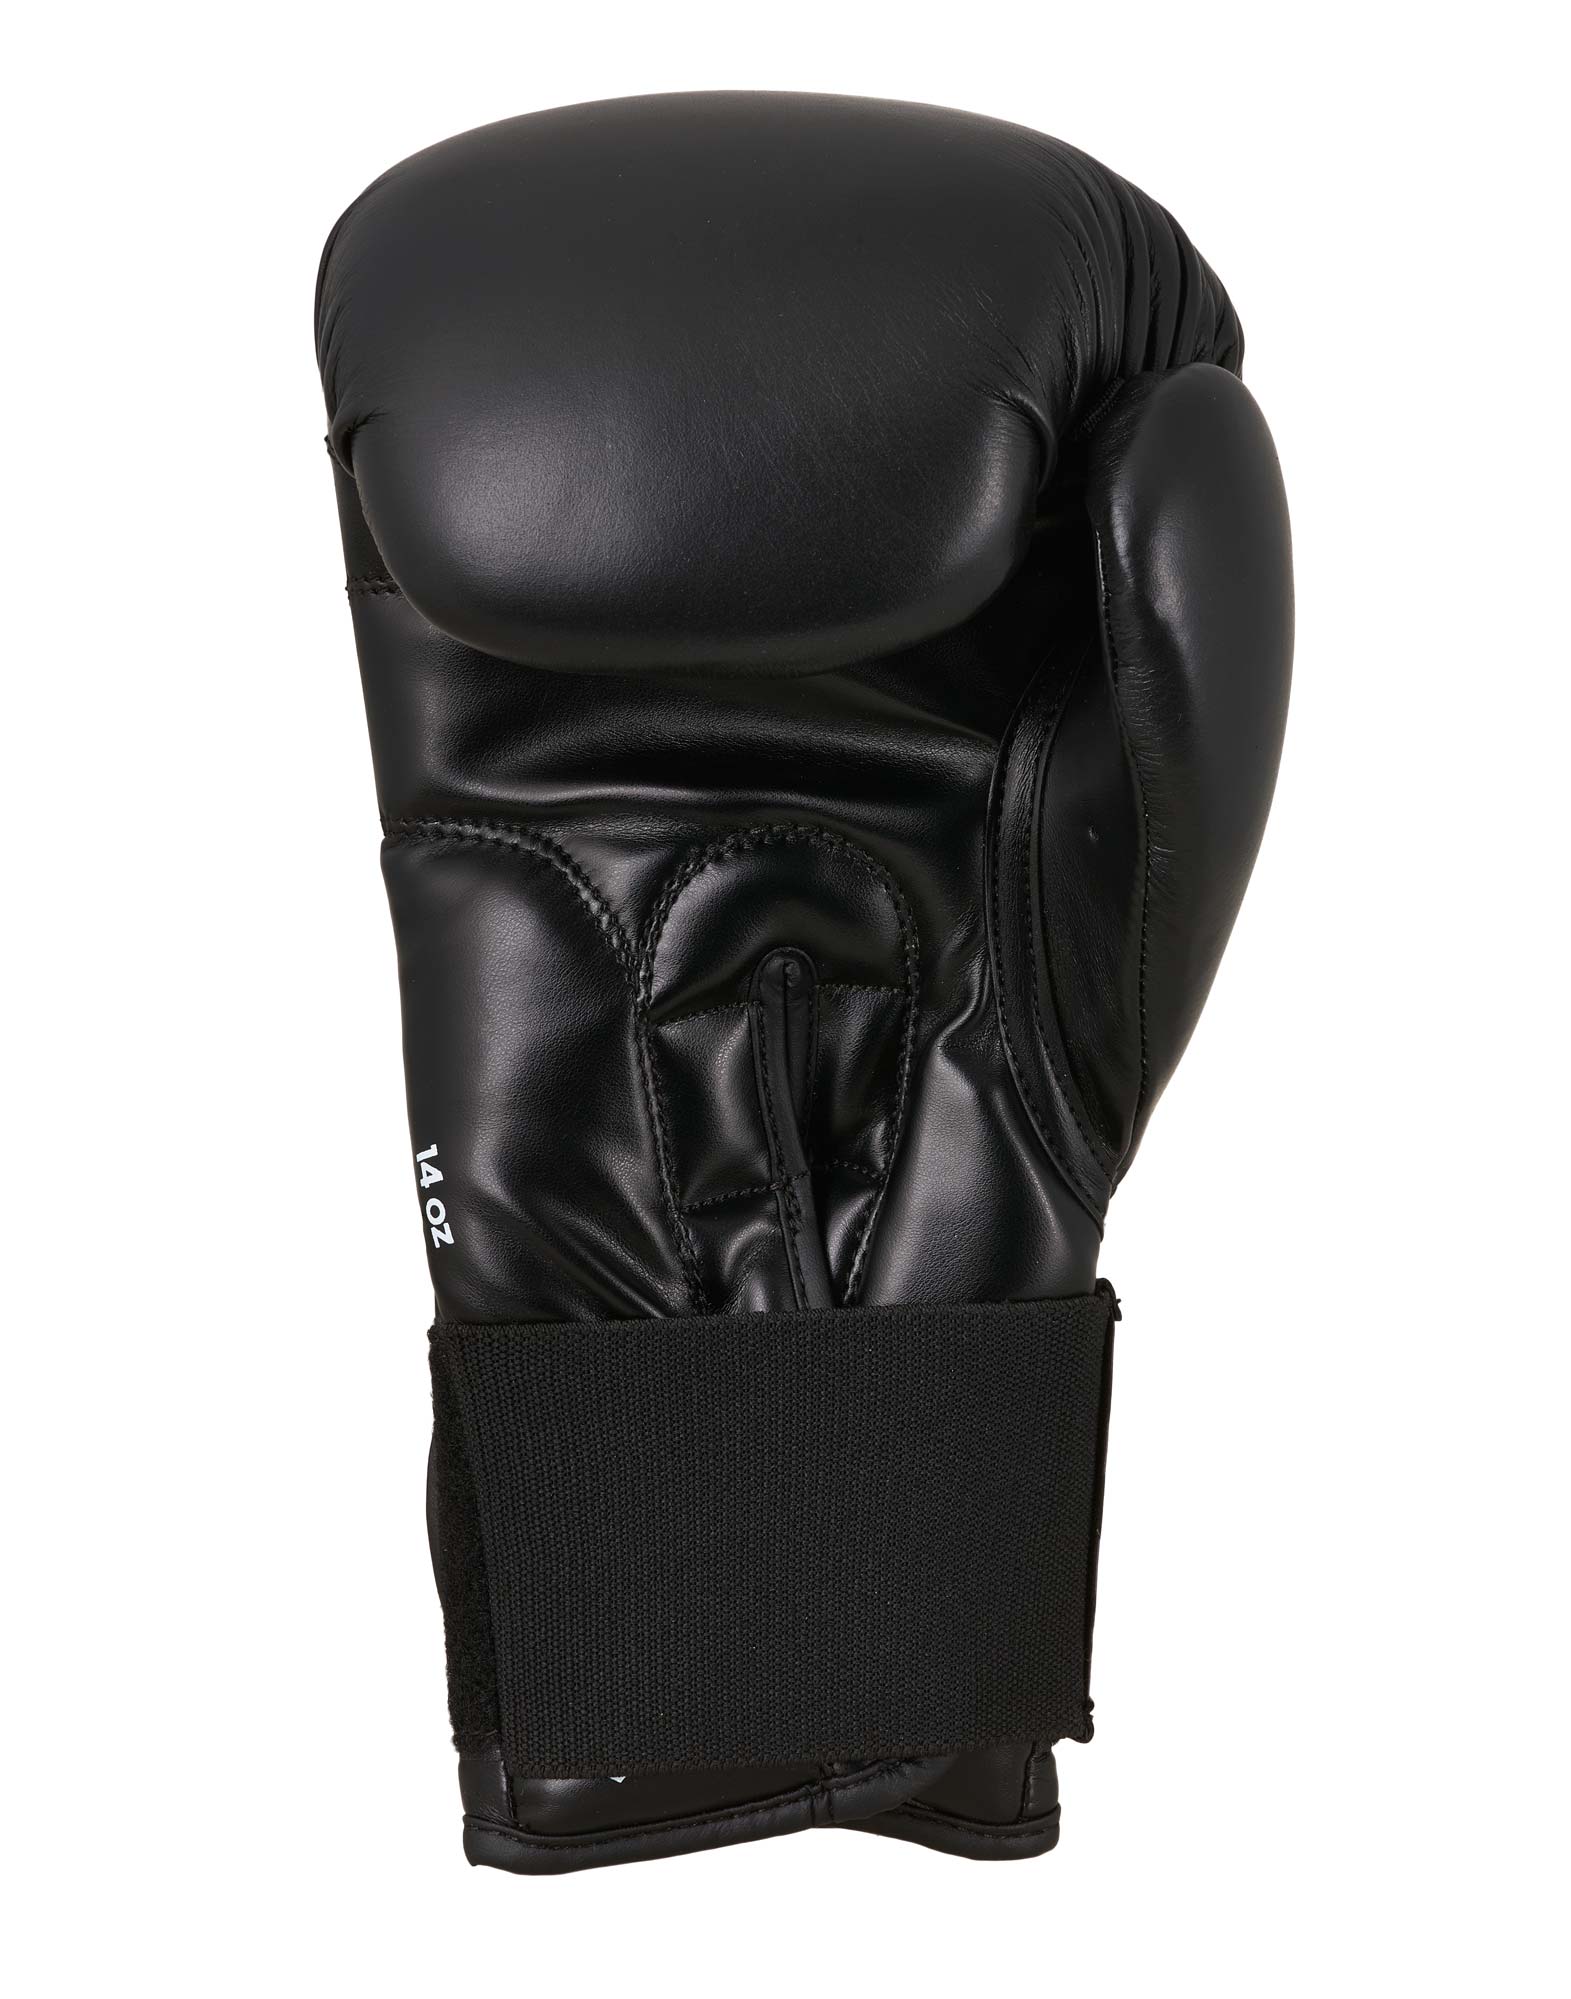 Adidas Boxhandschuhe Performer schwarz ADIBC01 | KAMPFHELDEN